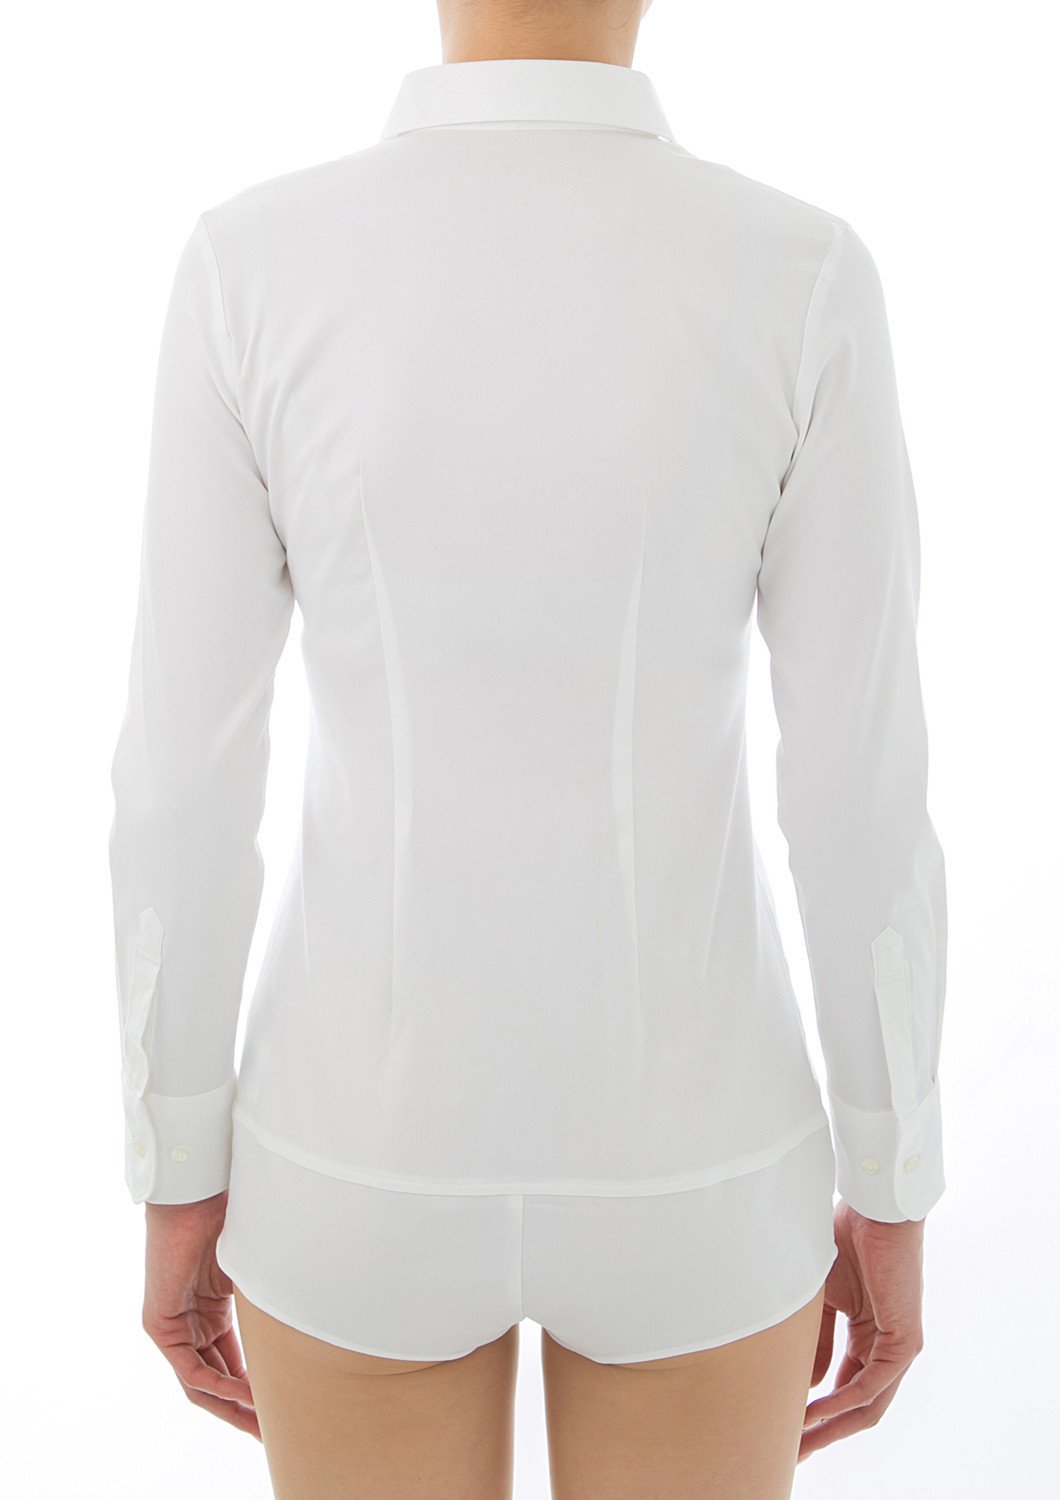 Premium Stretch Easy Care Long Sleeve Bodysuit Shirt White - LEONIS SHIRTS & FAVORITES